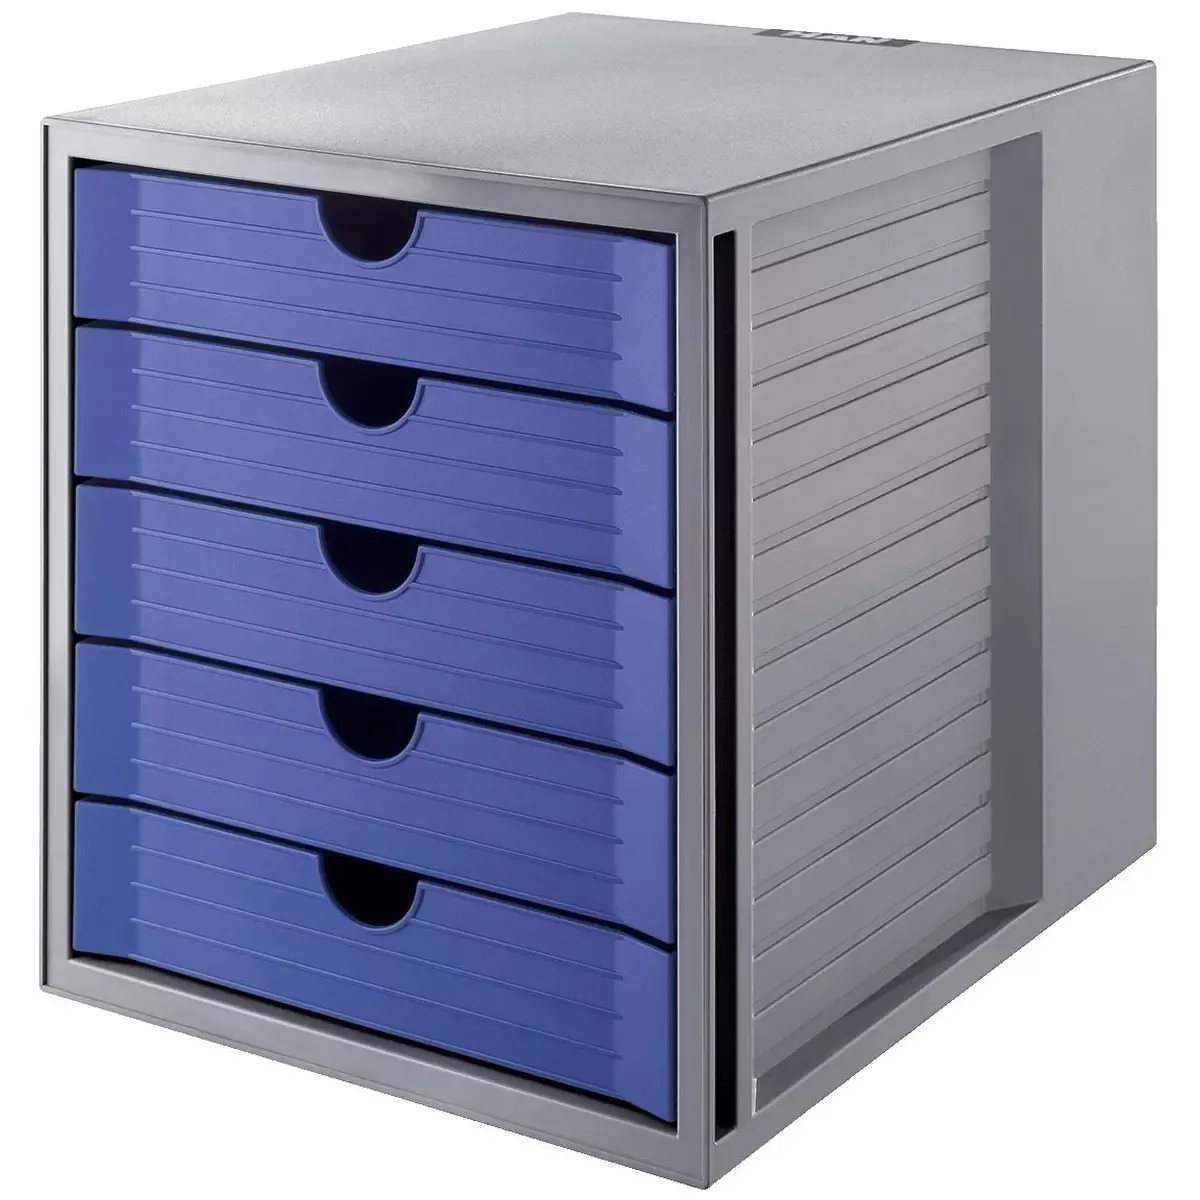 Büromaterial Schubladenbox SYSTEMBOX KARMA - A4 C4, 5 geschlossene Schubladen, grau-öko-blau für Bürobedarf